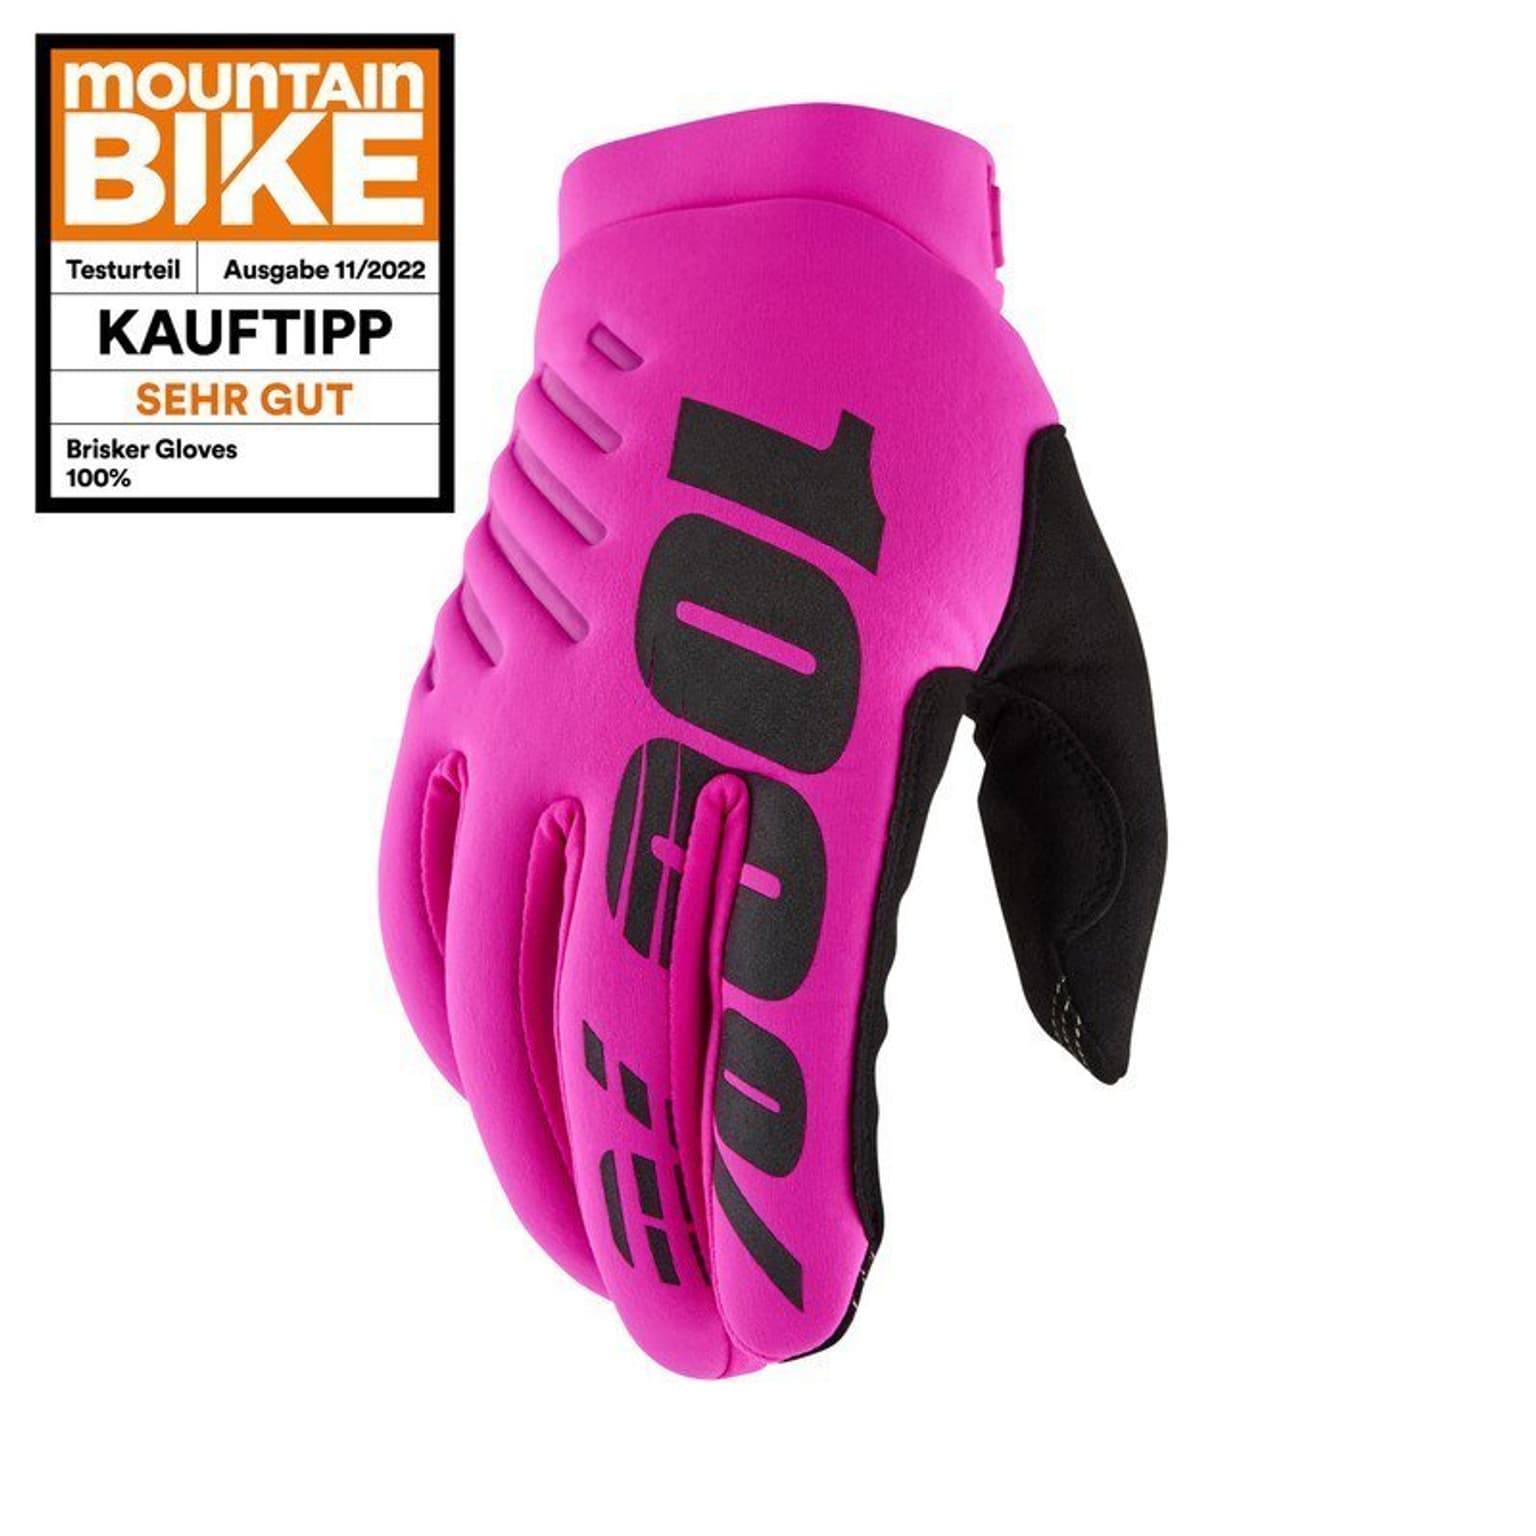 100% 100% Brisker Bike-Handschuhe pink 1